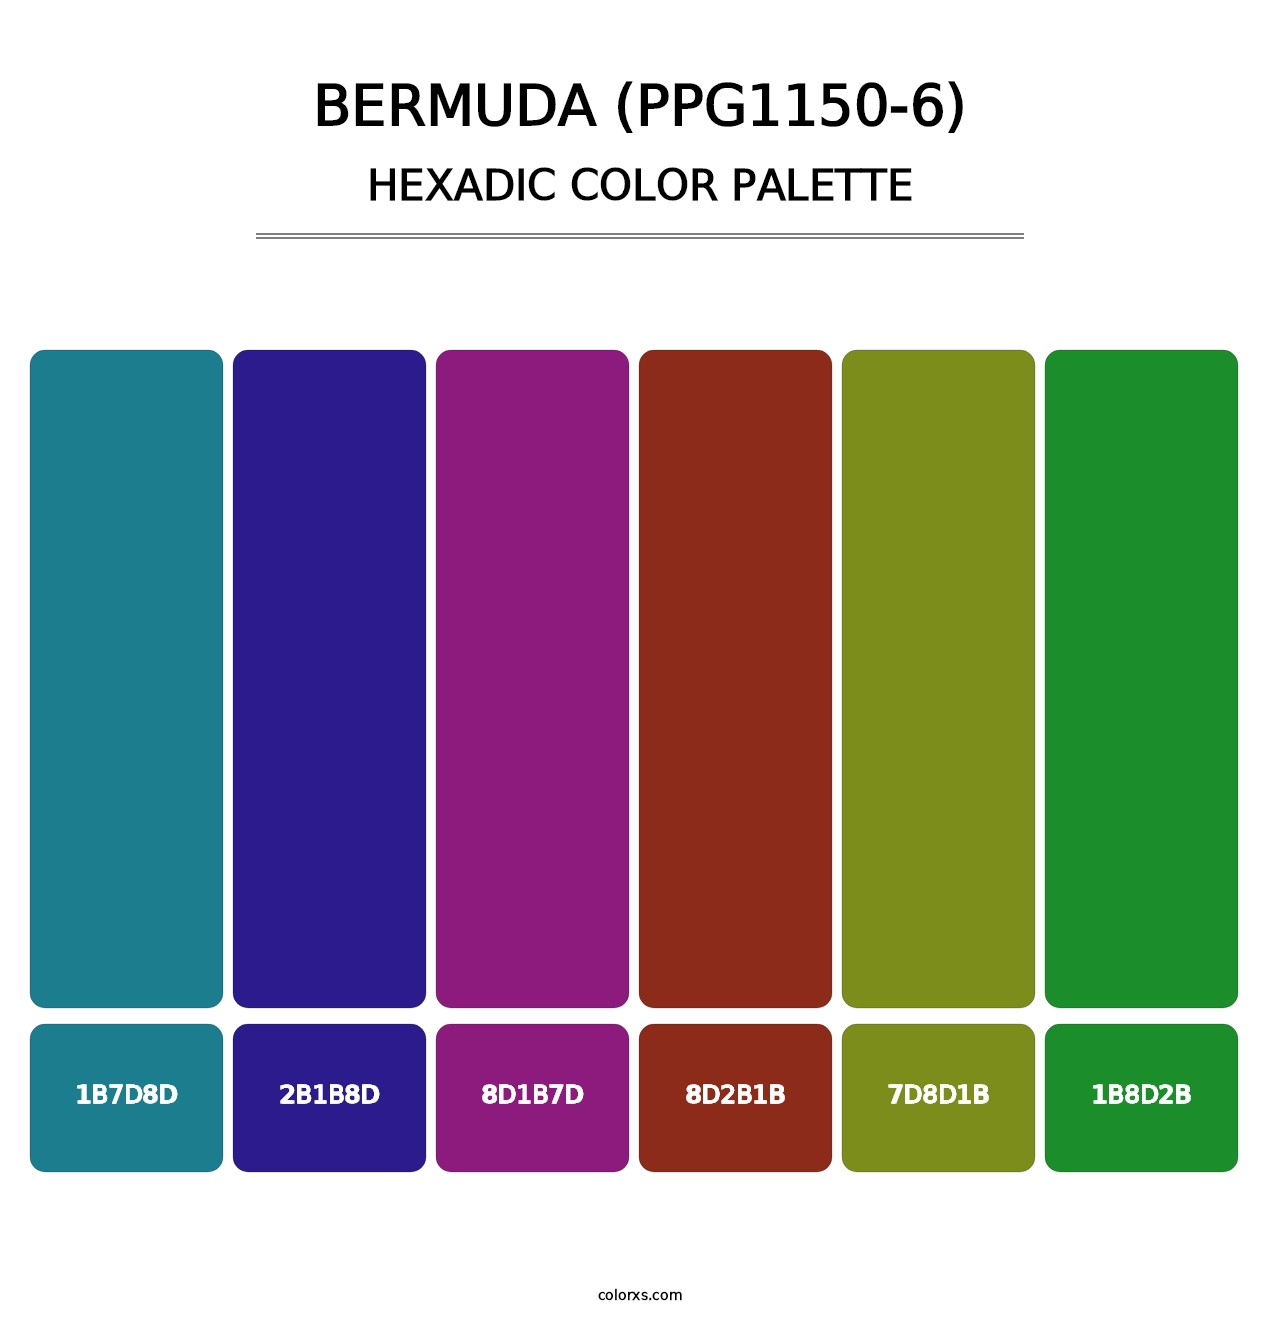 Bermuda (PPG1150-6) - Hexadic Color Palette